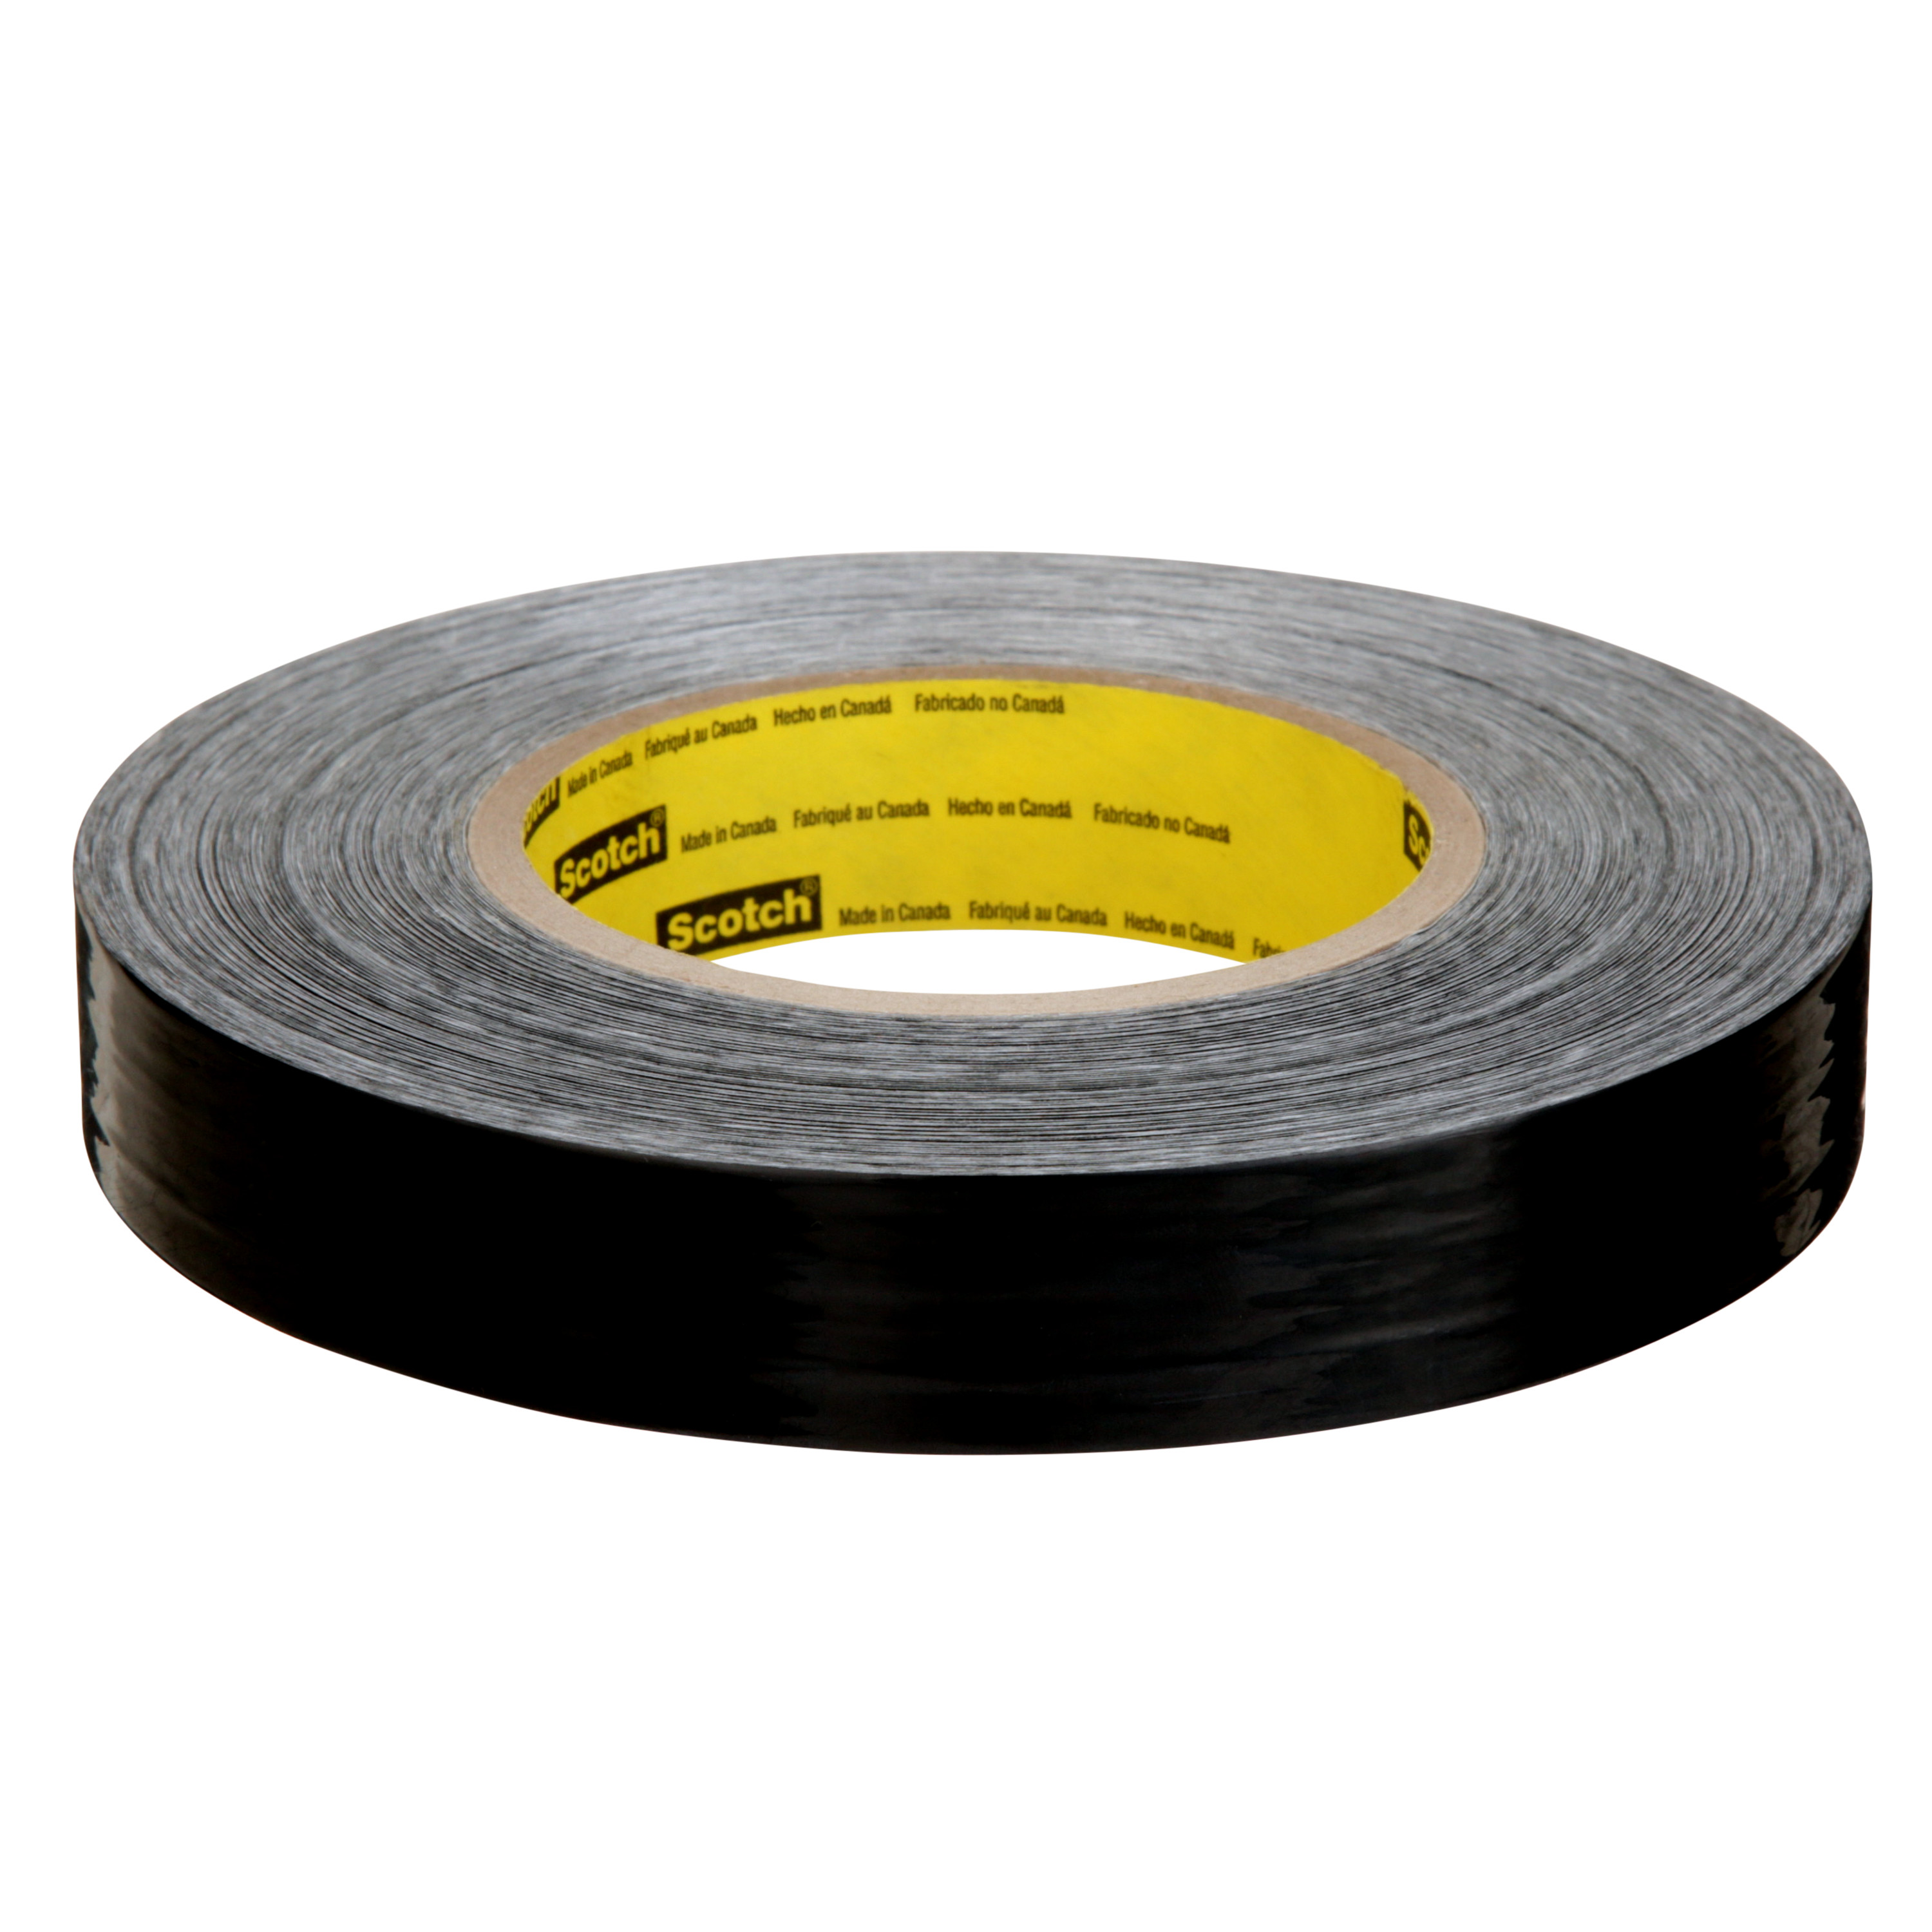 Product Number 890MSR | Scotch® Filament Tape 890MSR